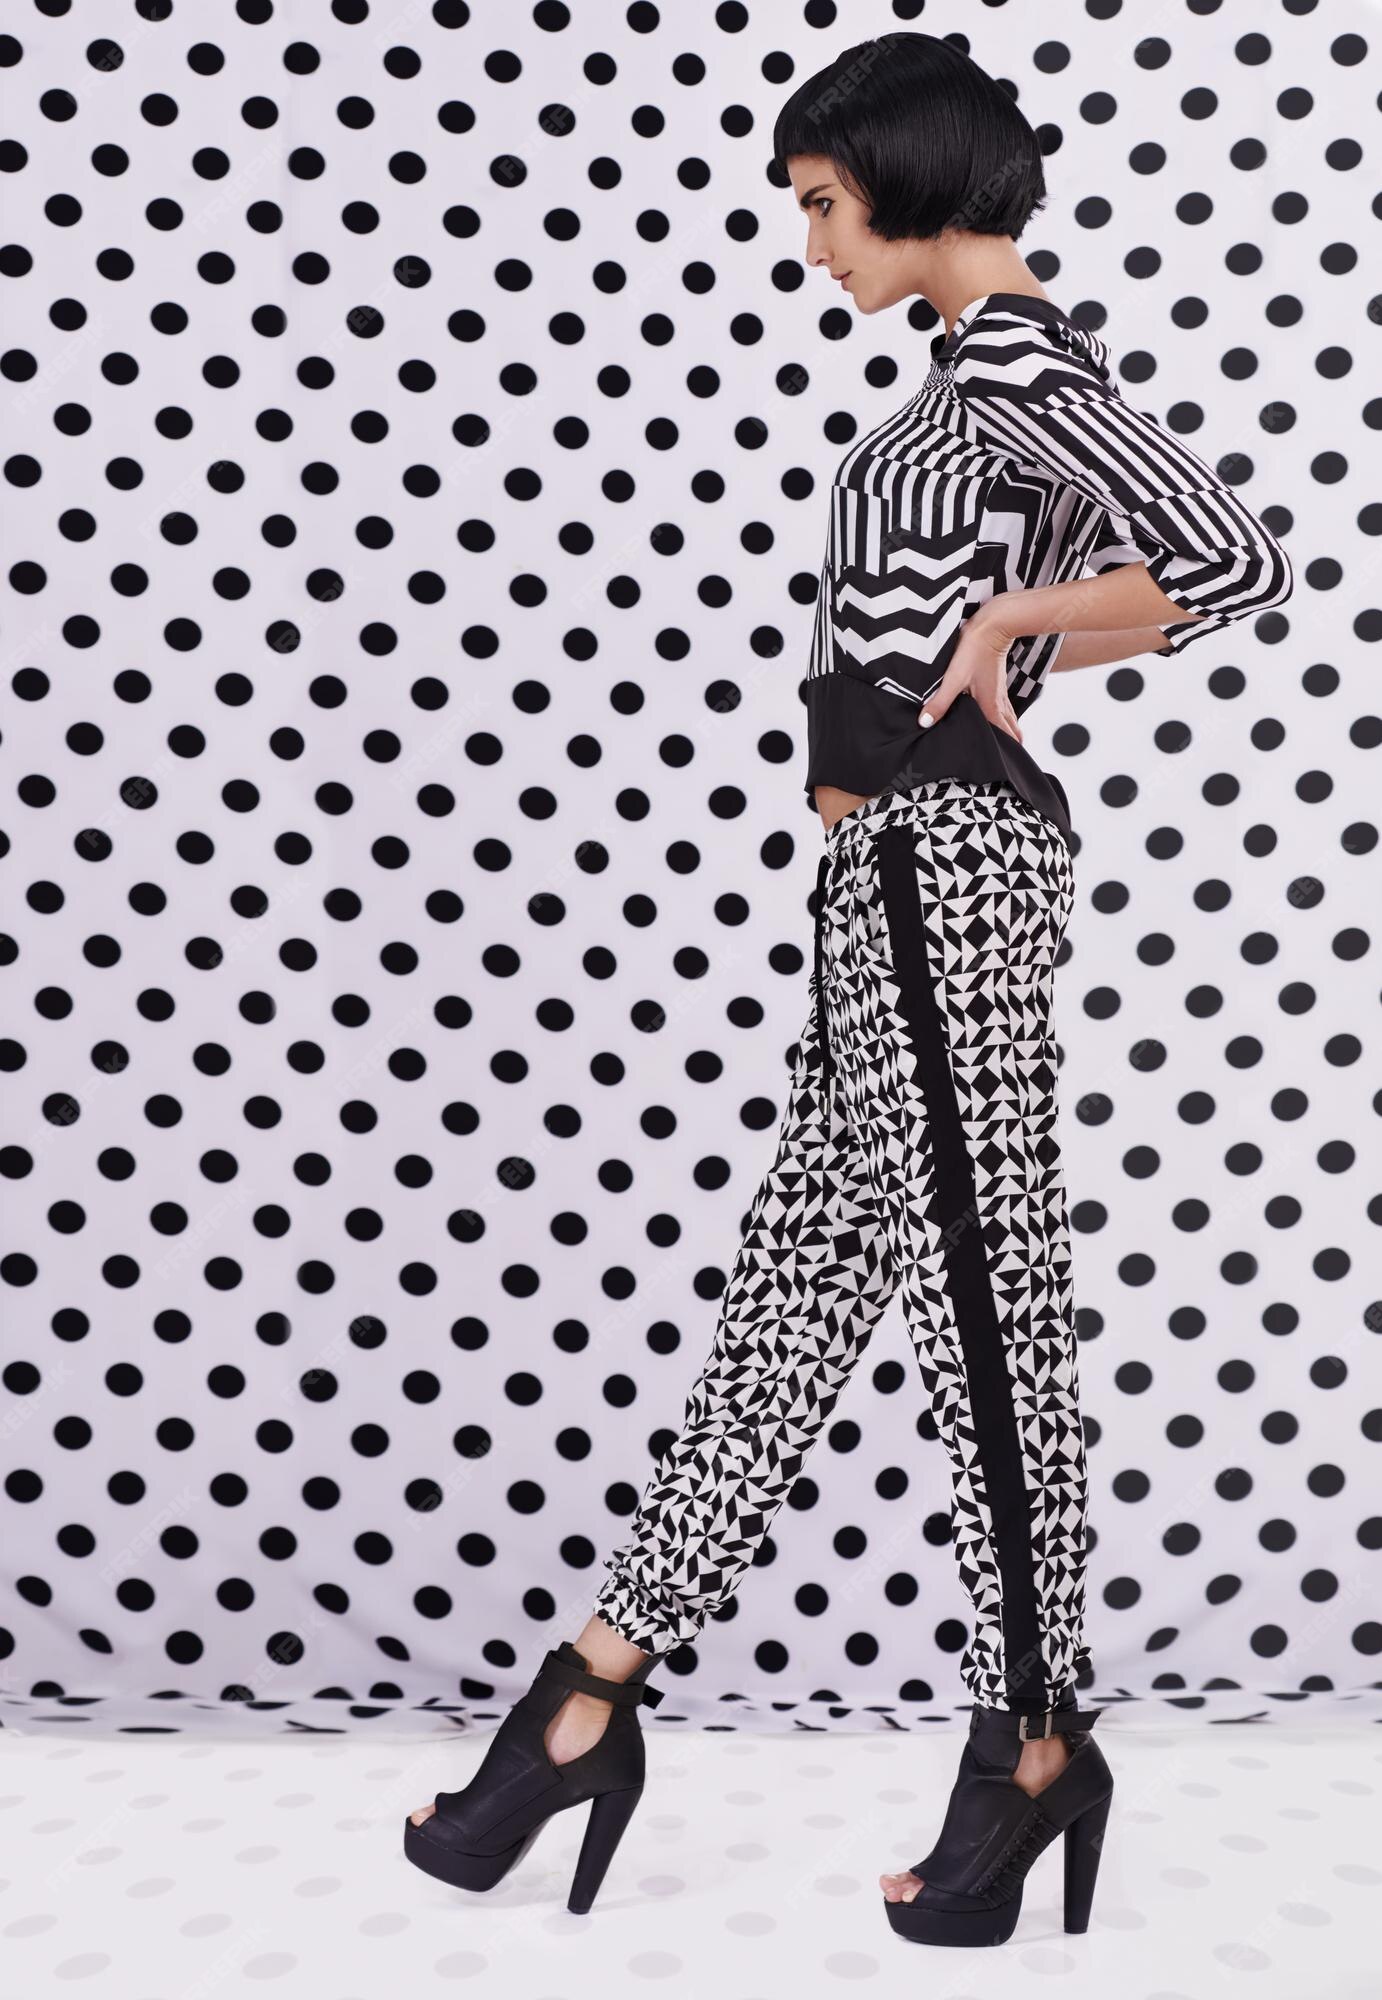 Premium Photo | Polka dot style studio shot of a retrostylish young woman  against a black and white polka dot background